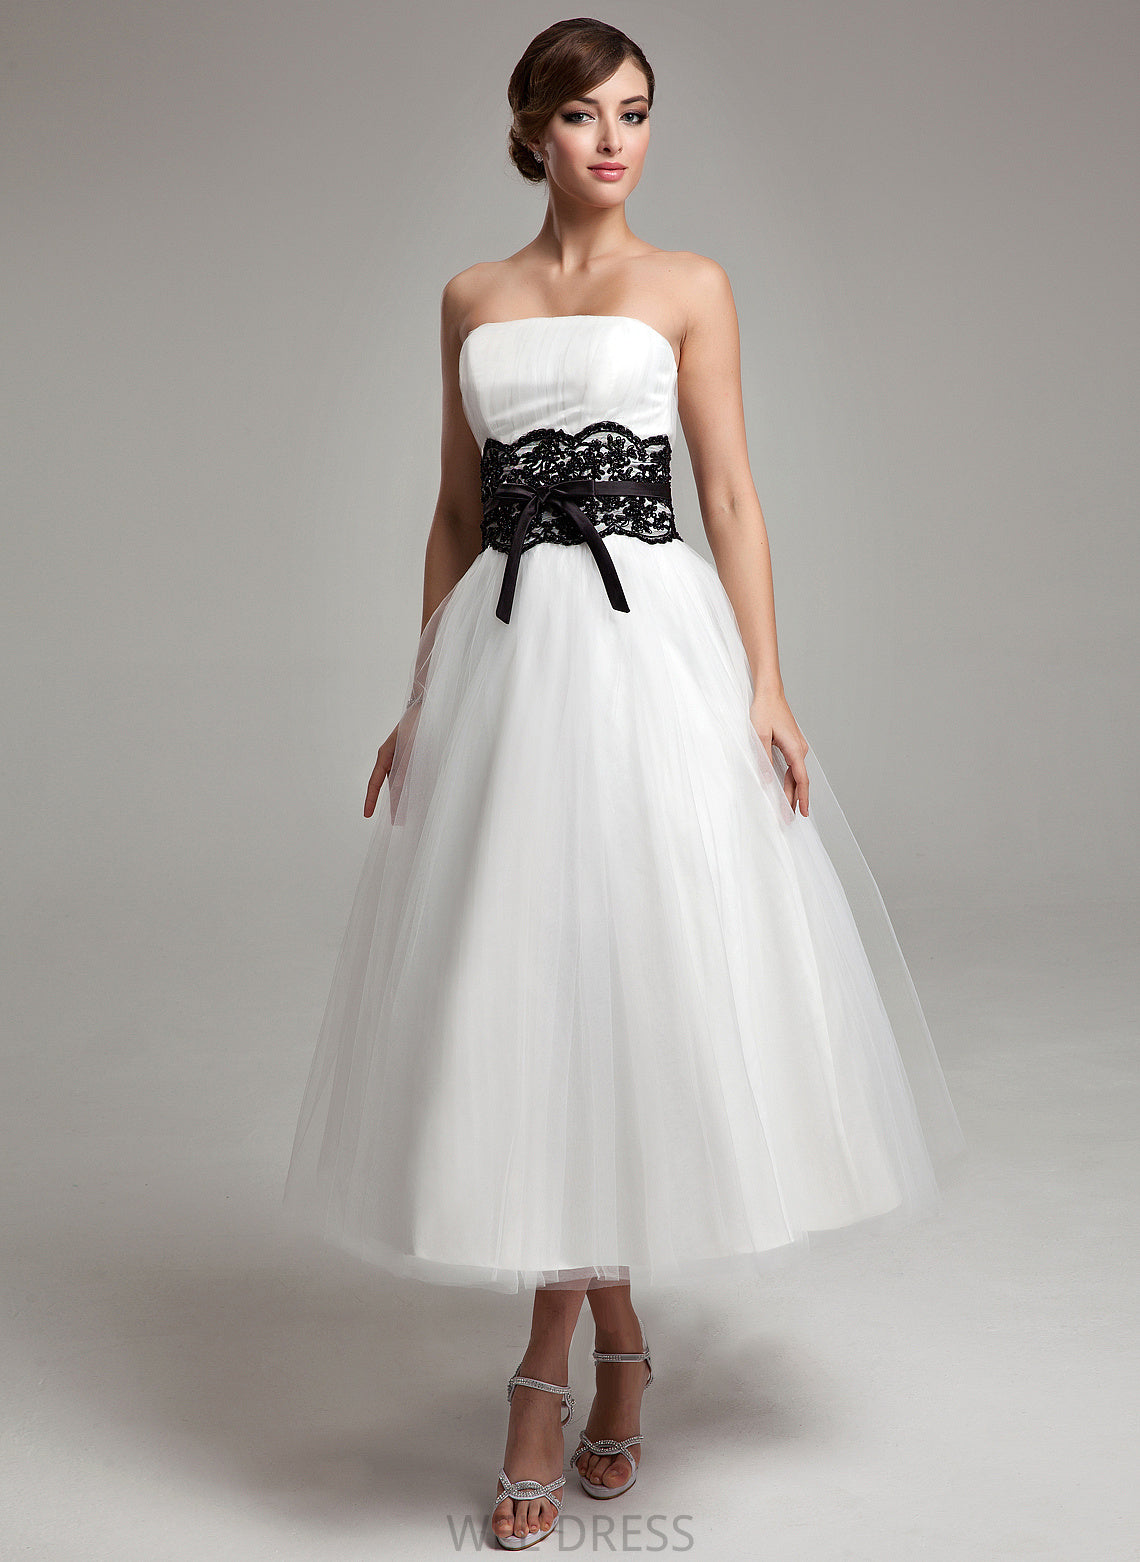 Beading With Sash Tulle Bow(s) Dress Tea-Length Strapless Lace Yareli Ball-Gown/Princess Wedding Wedding Dresses